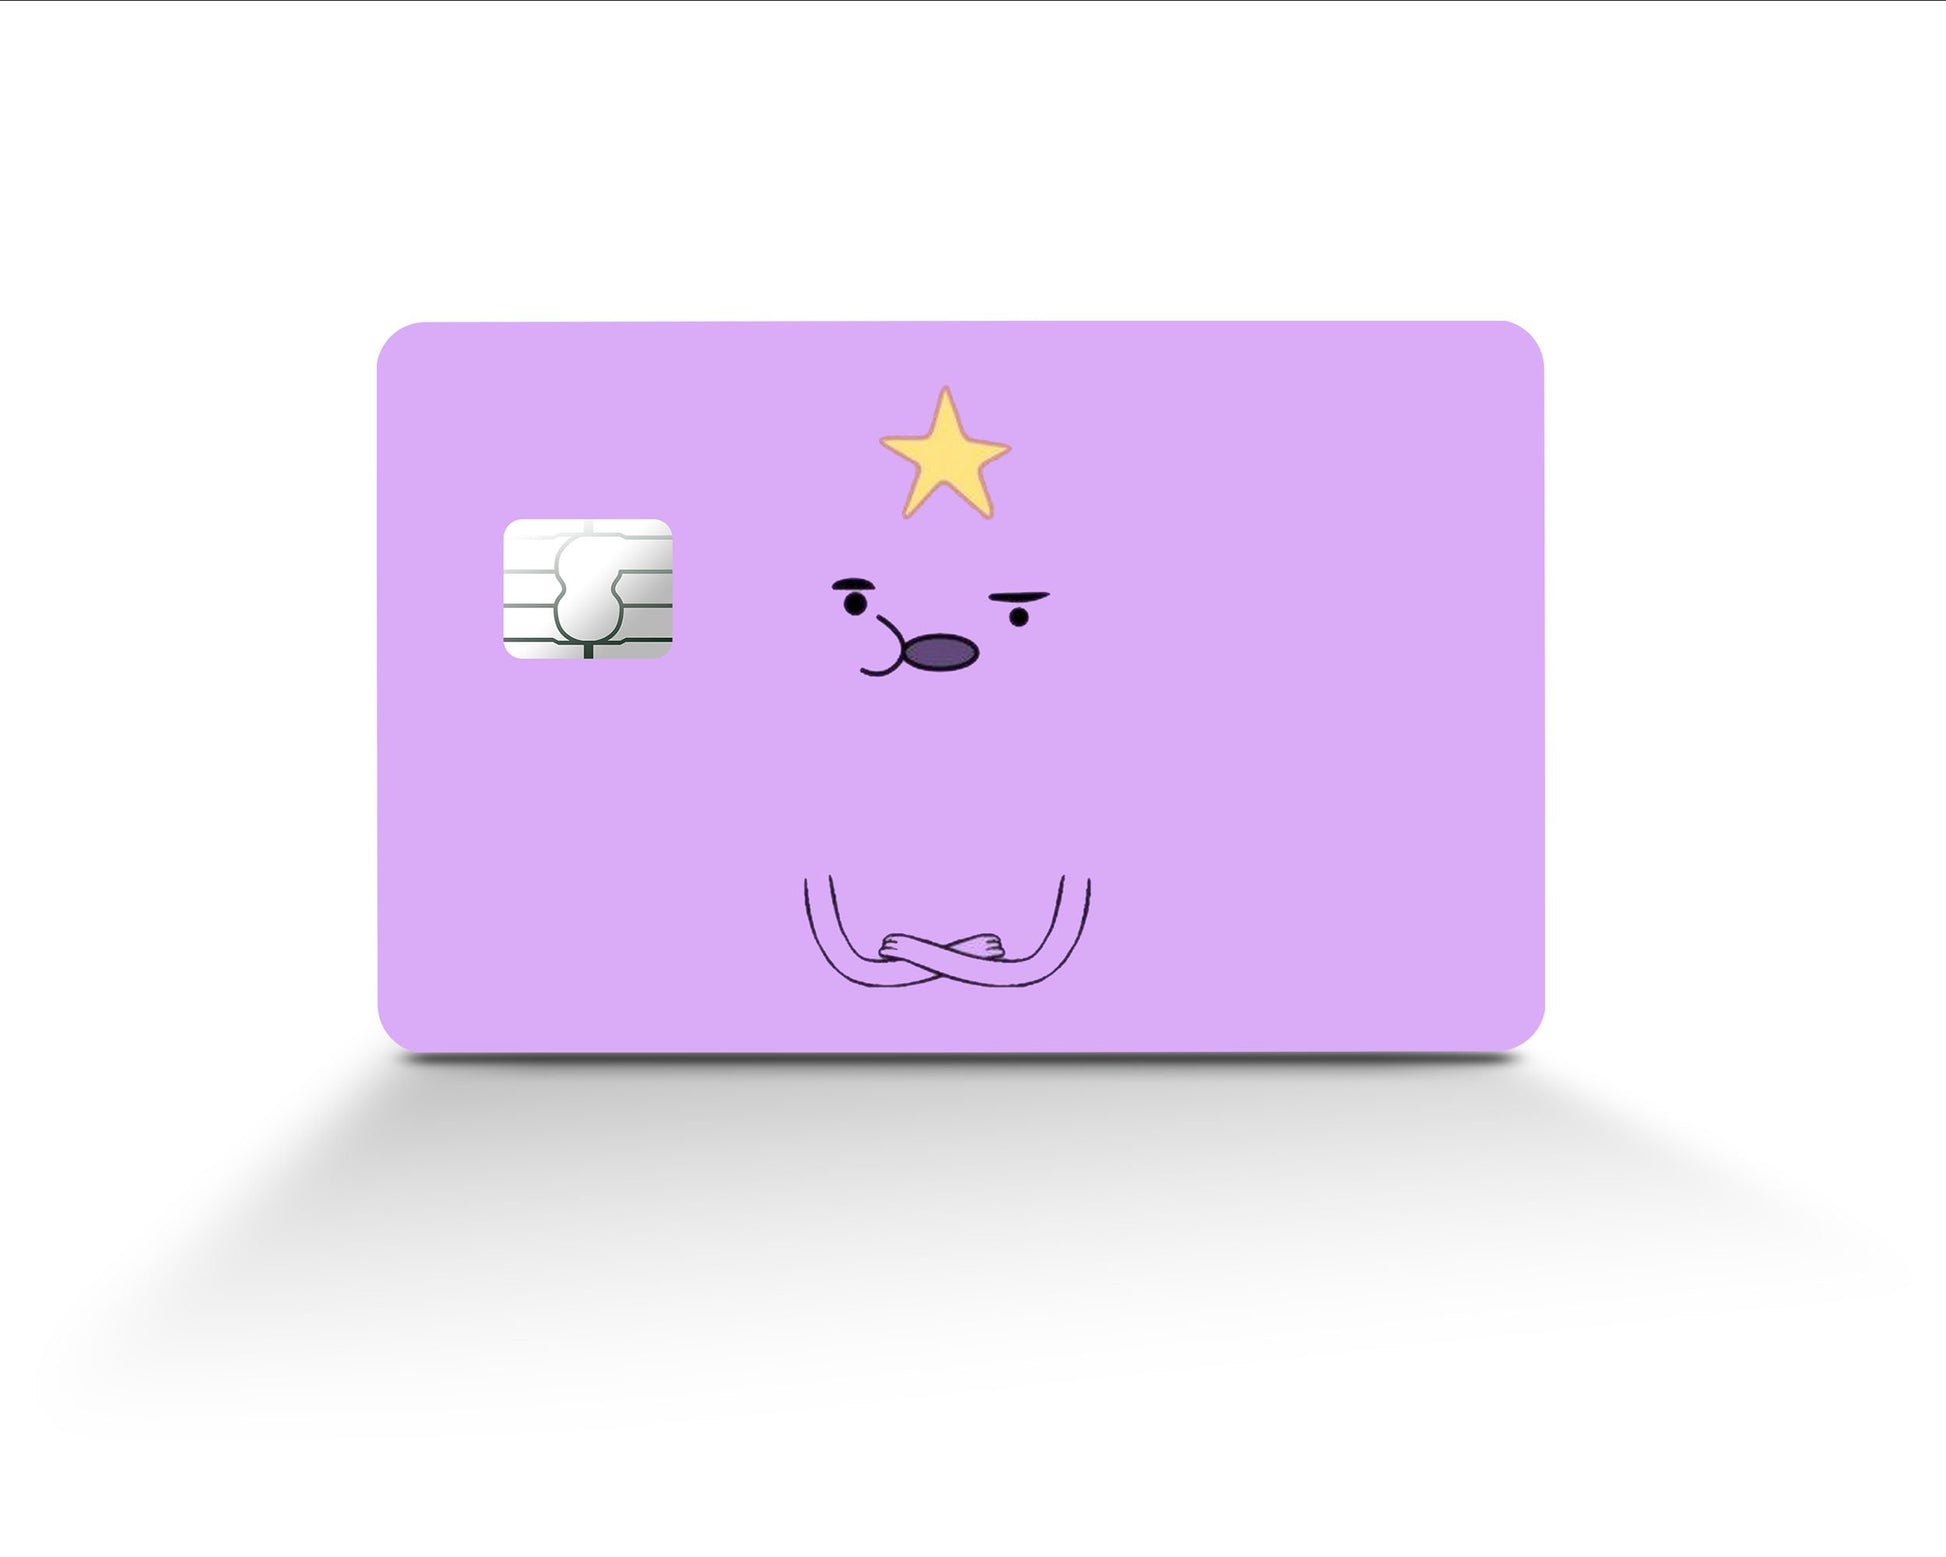 Anime Town Creations Credit Card Adventure Time Purple Lumpy Space Princess Full Skins - Pop culture Adventure Time Skin